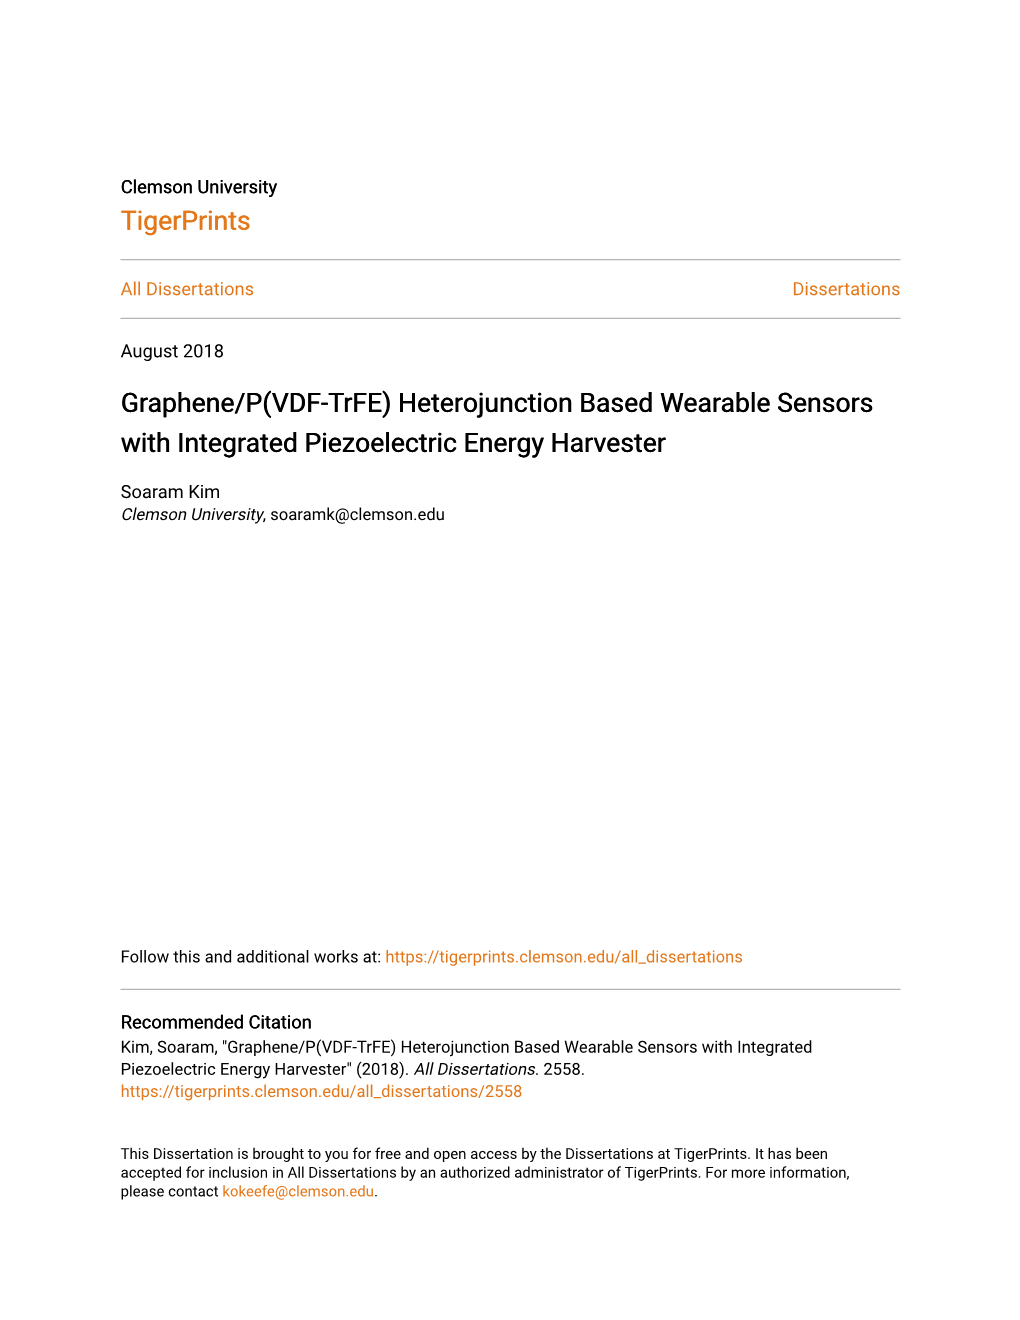 Graphene/P(VDF-Trfe) Heterojunction Based Wearable Sensors with Integrated Piezoelectric Energy Harvester